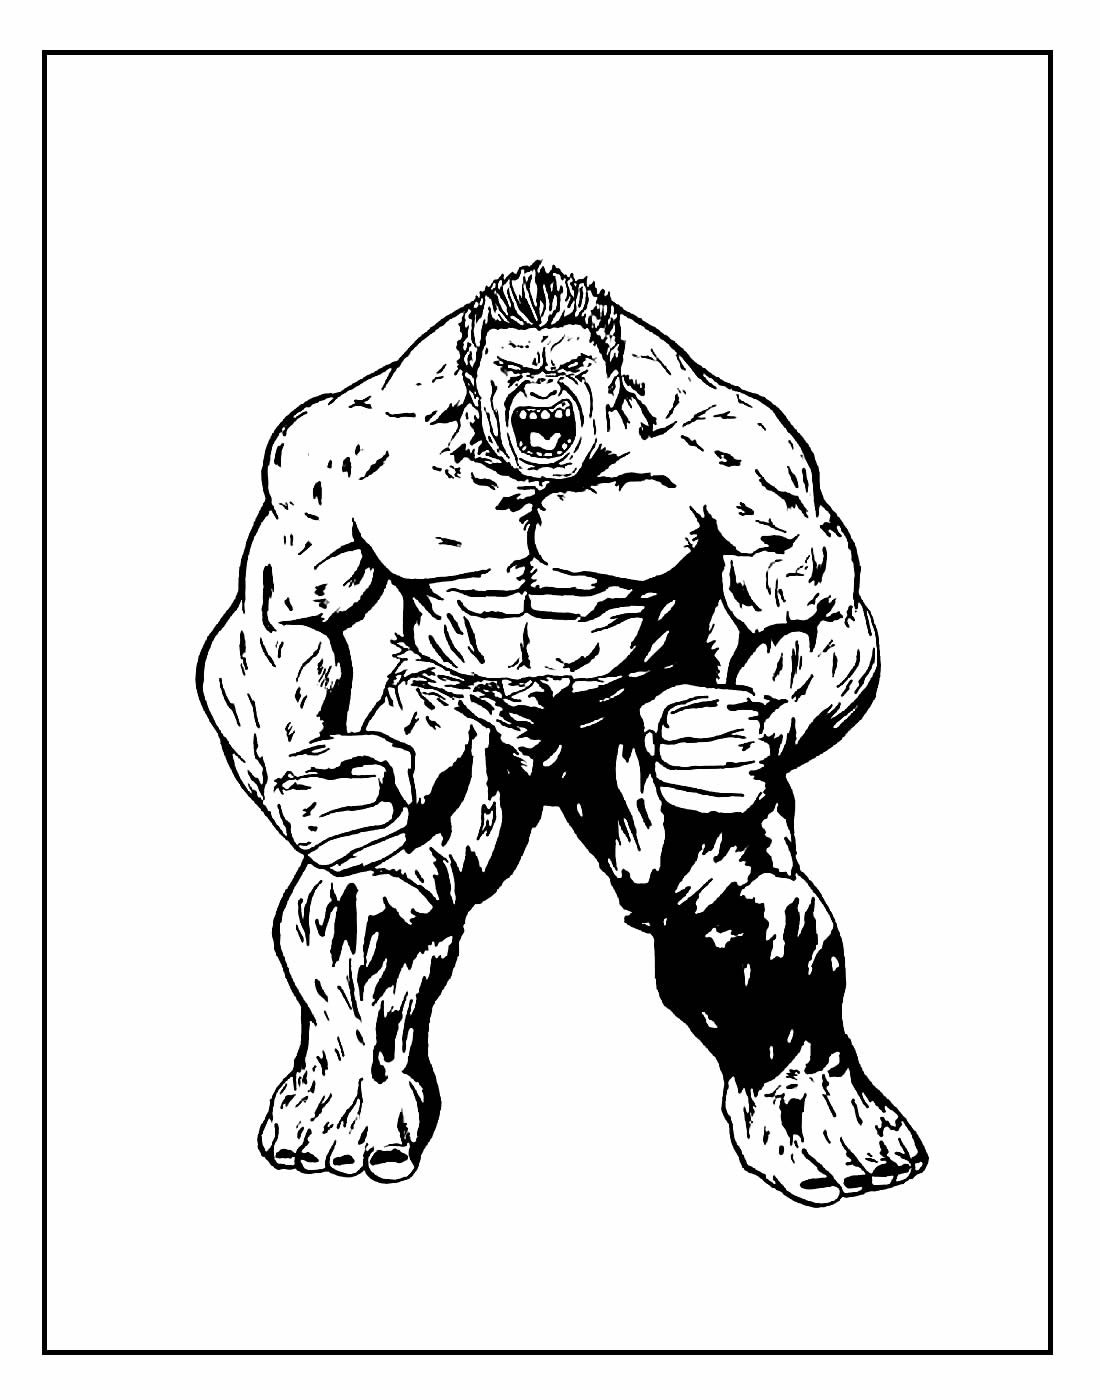 Página para colorir do Hulk